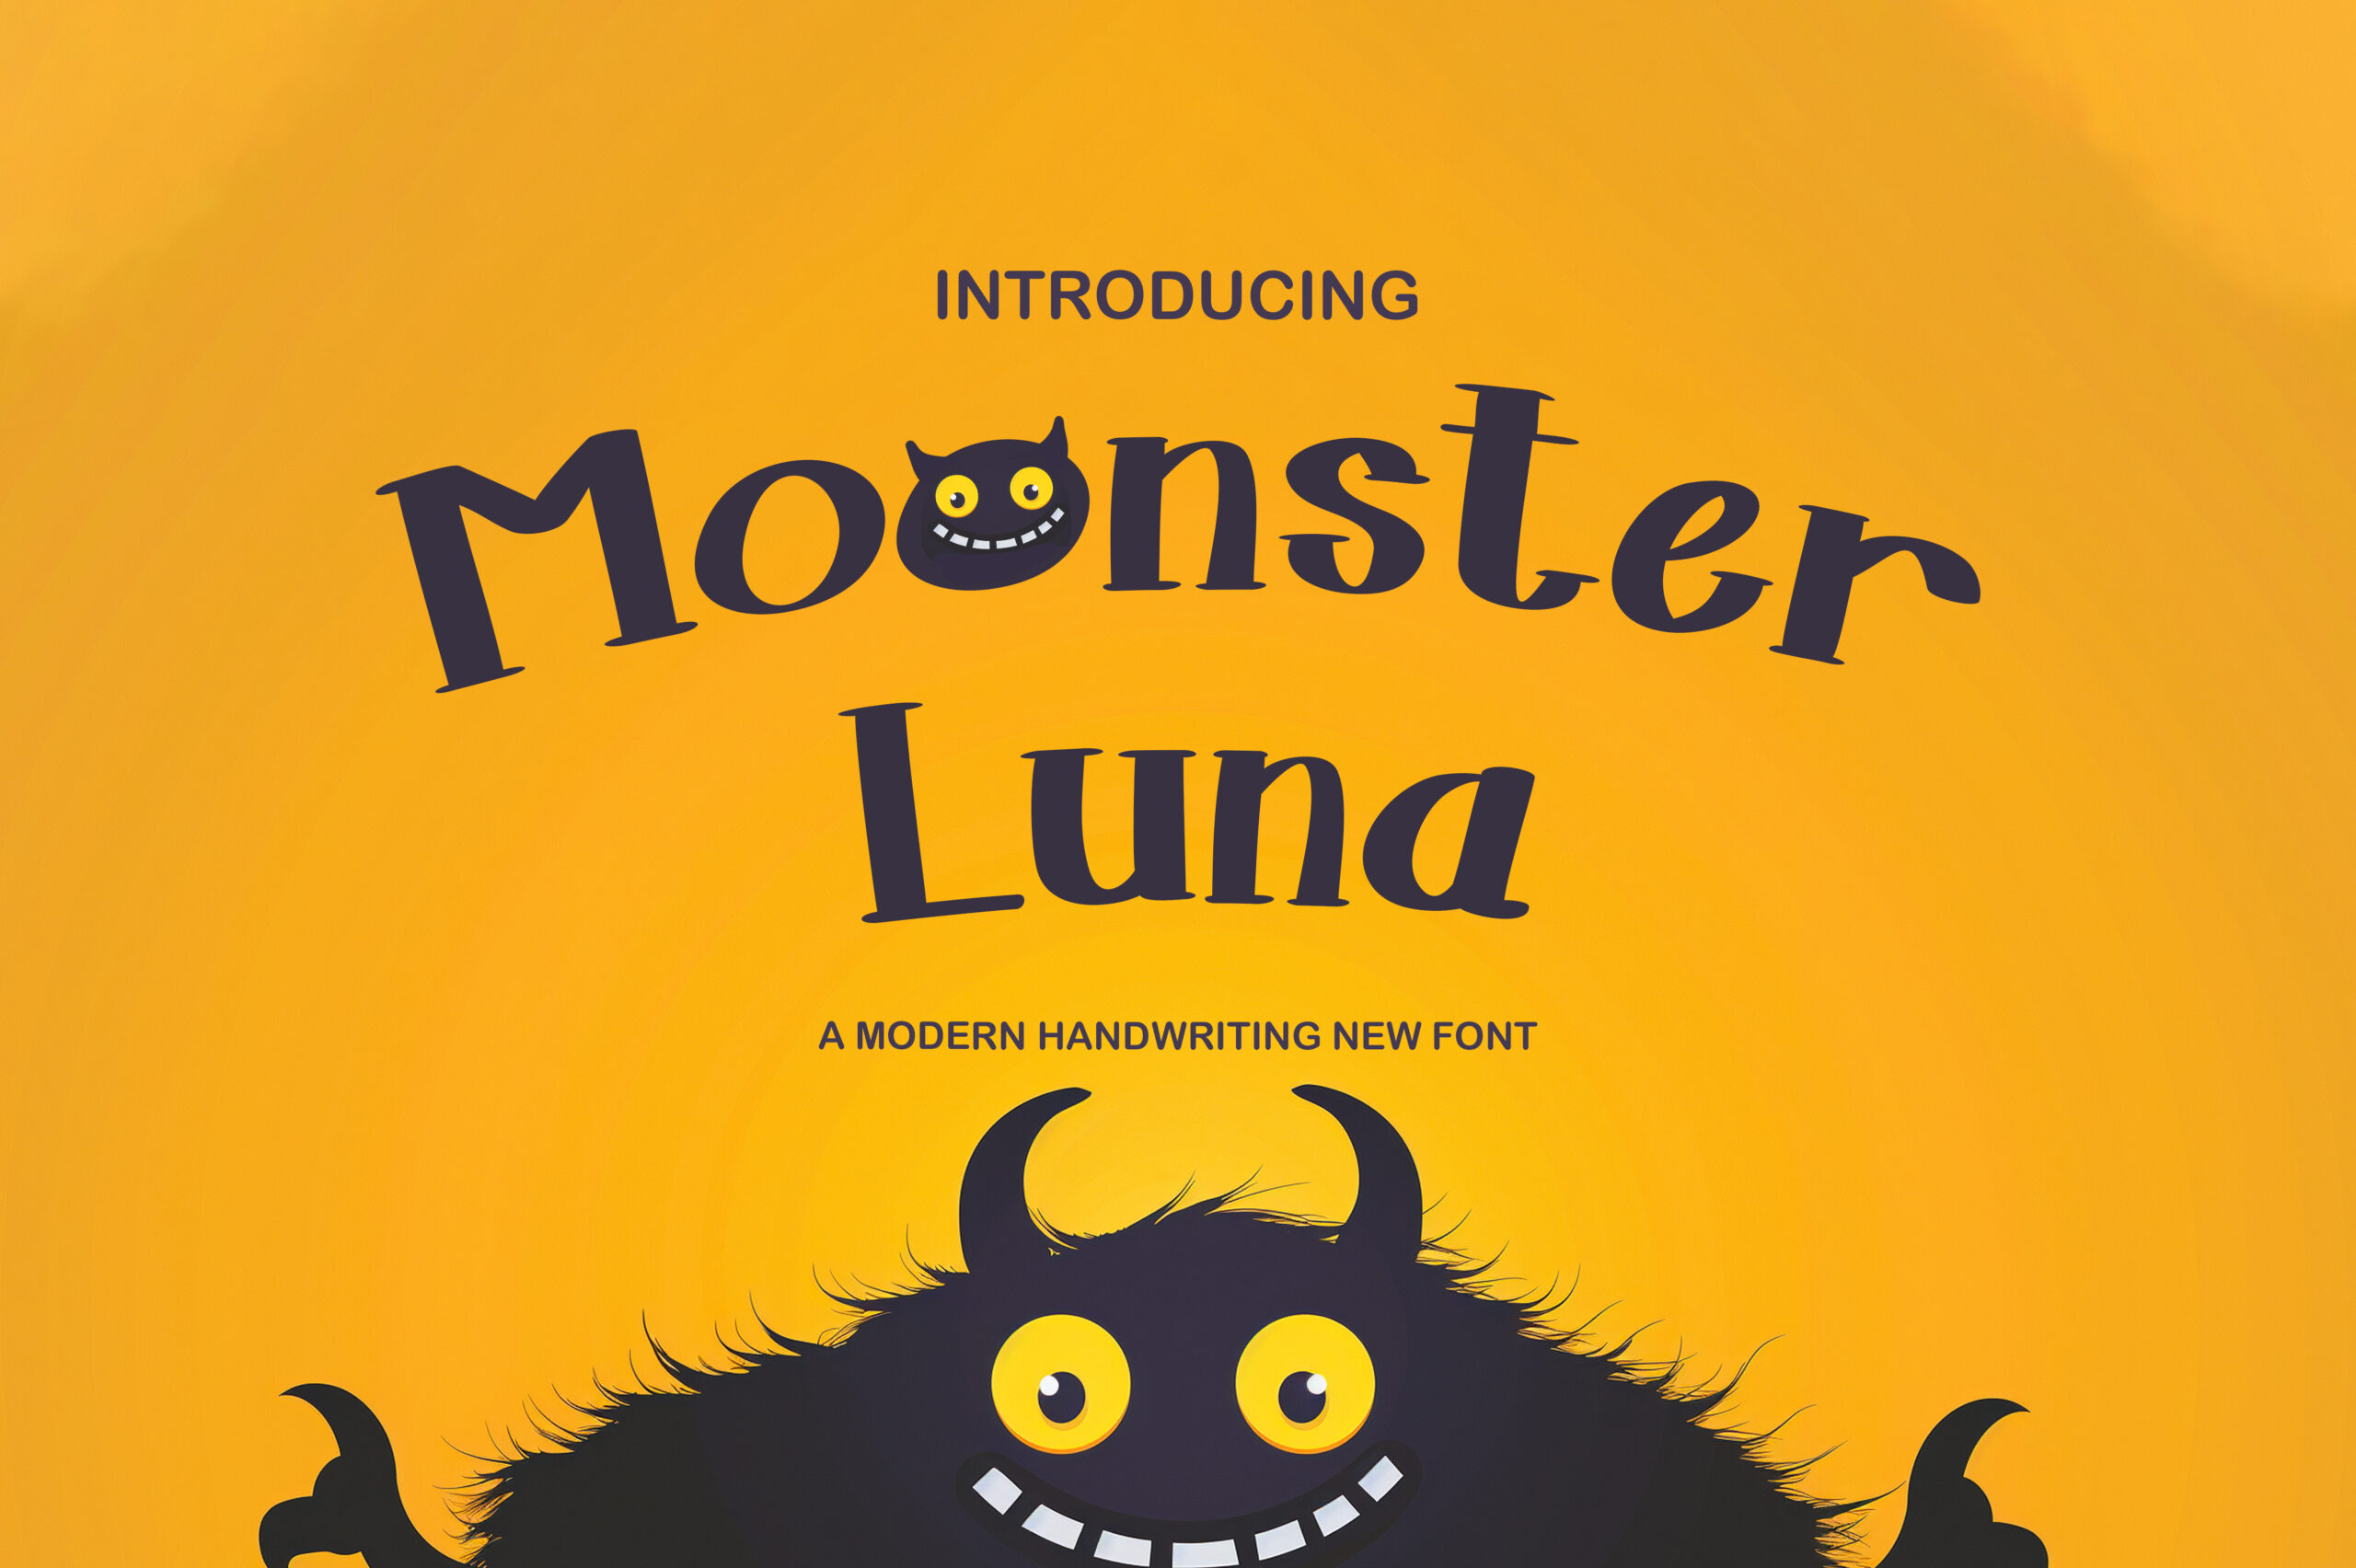 3. Moonster Luna